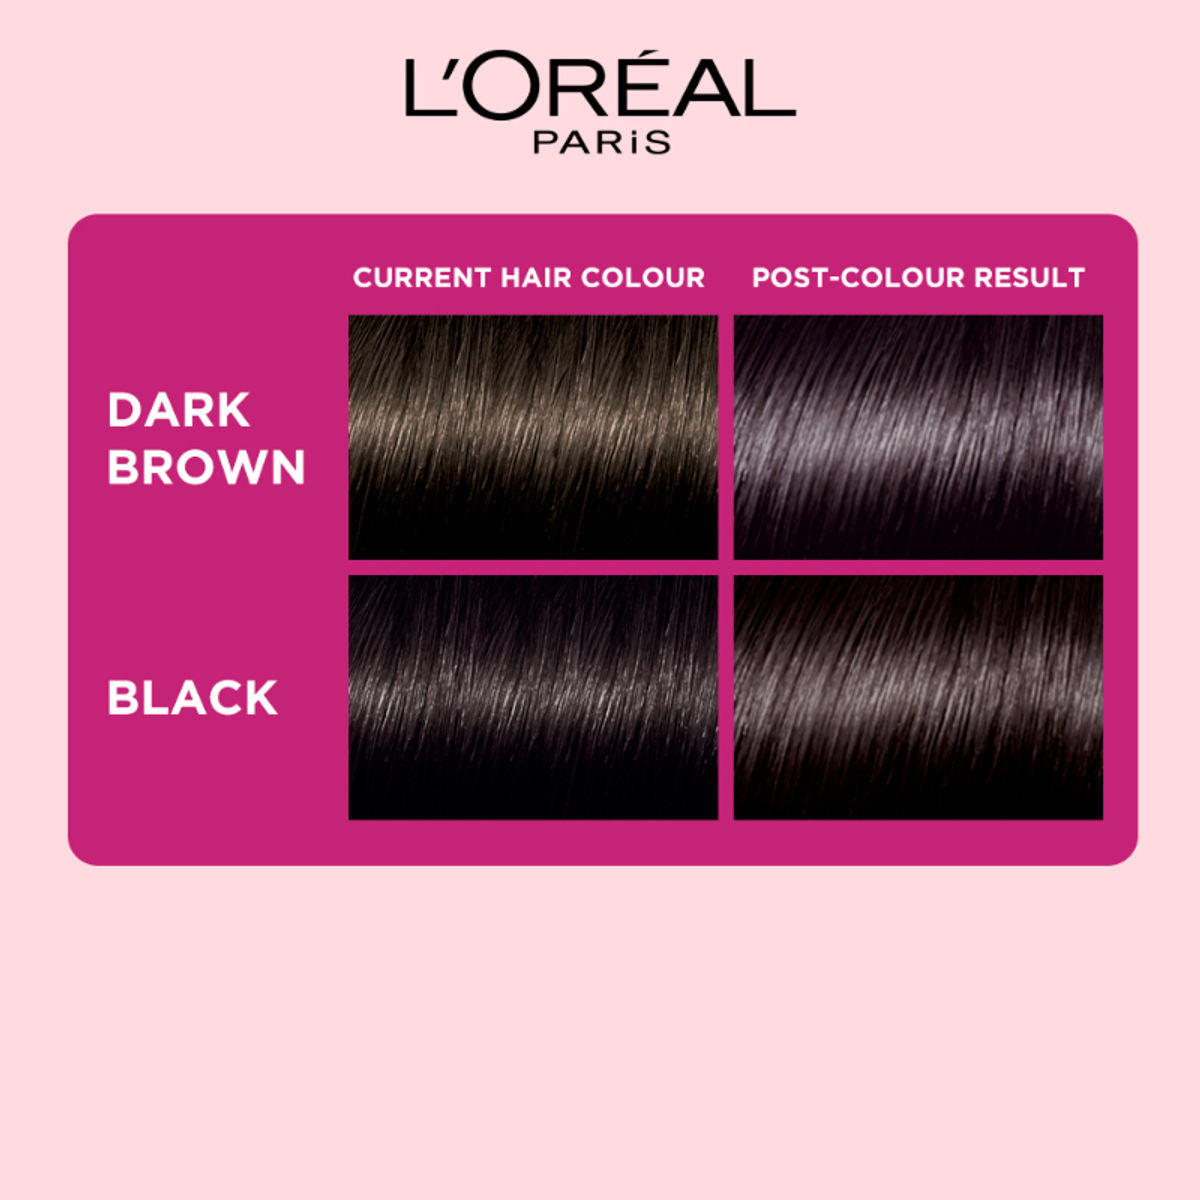 L'Oreal Paris Casting Creme Gloss Hair Color - Ebony Black 200 (87.5 g + 72 ml) L'Oreal Paris